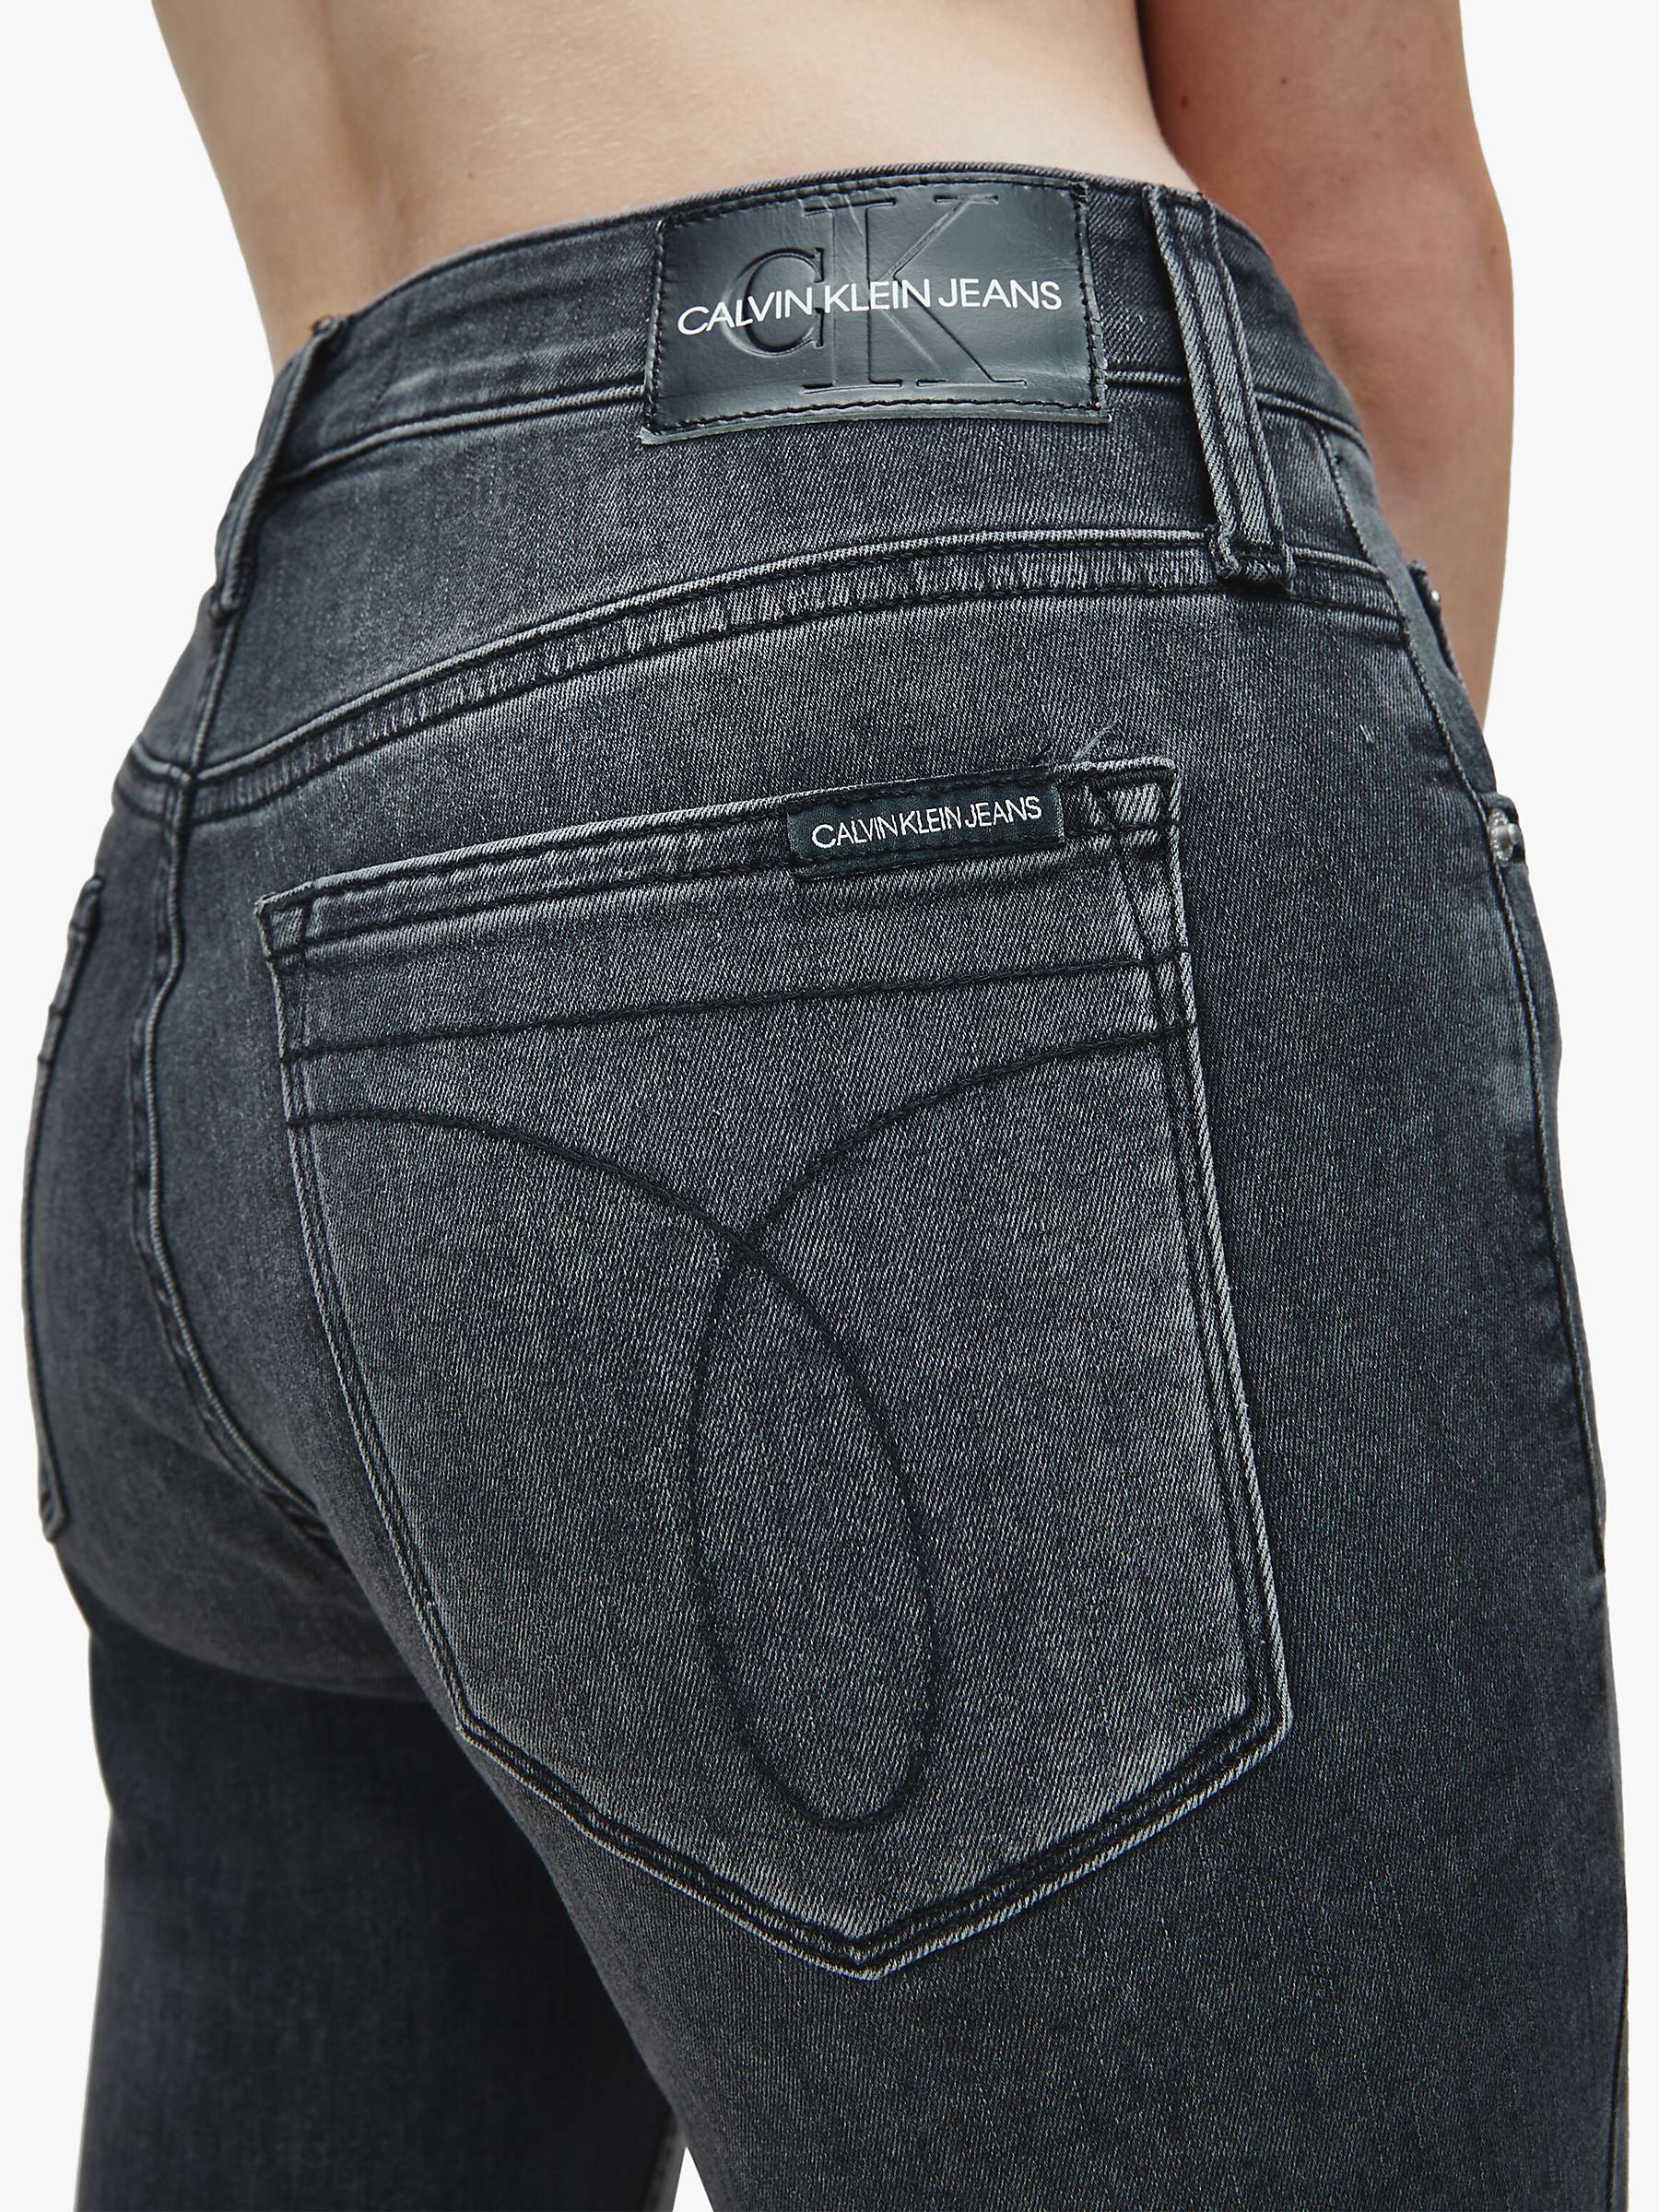 Buy Calvin Klein High Rise Monogram Skinny Jeans Online at johnlewis.com